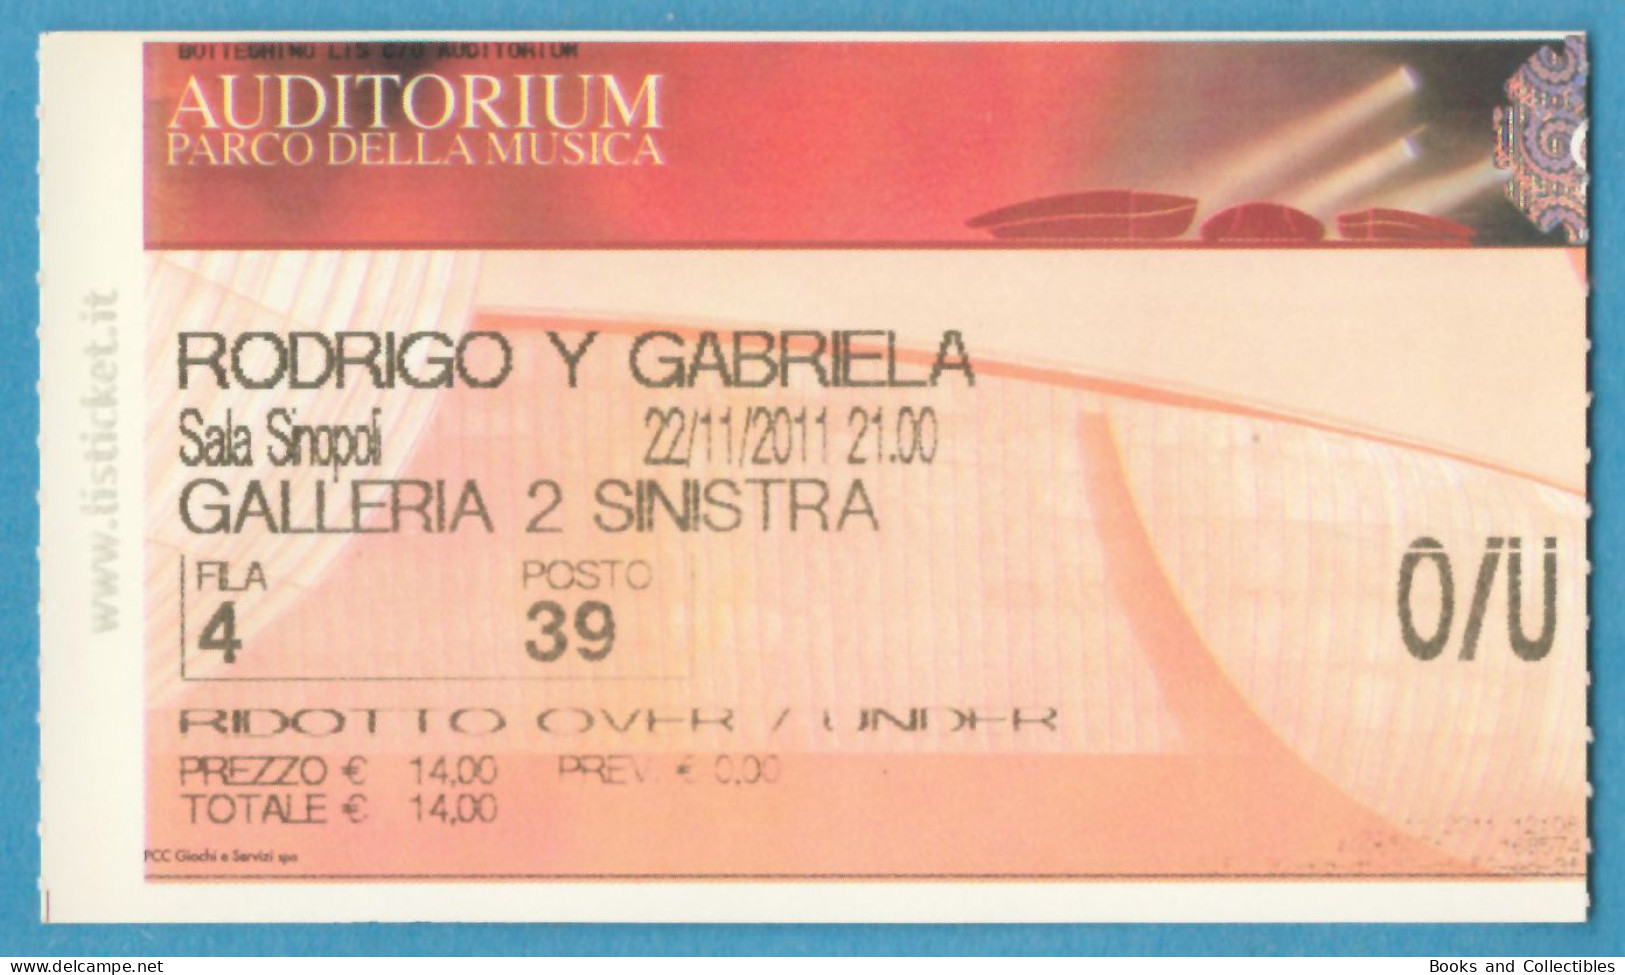 Q-4500 * RODRIGO Y GABRIELA - Auditorium Parco Delle Musica, Roma (Italy) - 22 Novembre 2011 - Concerttickets